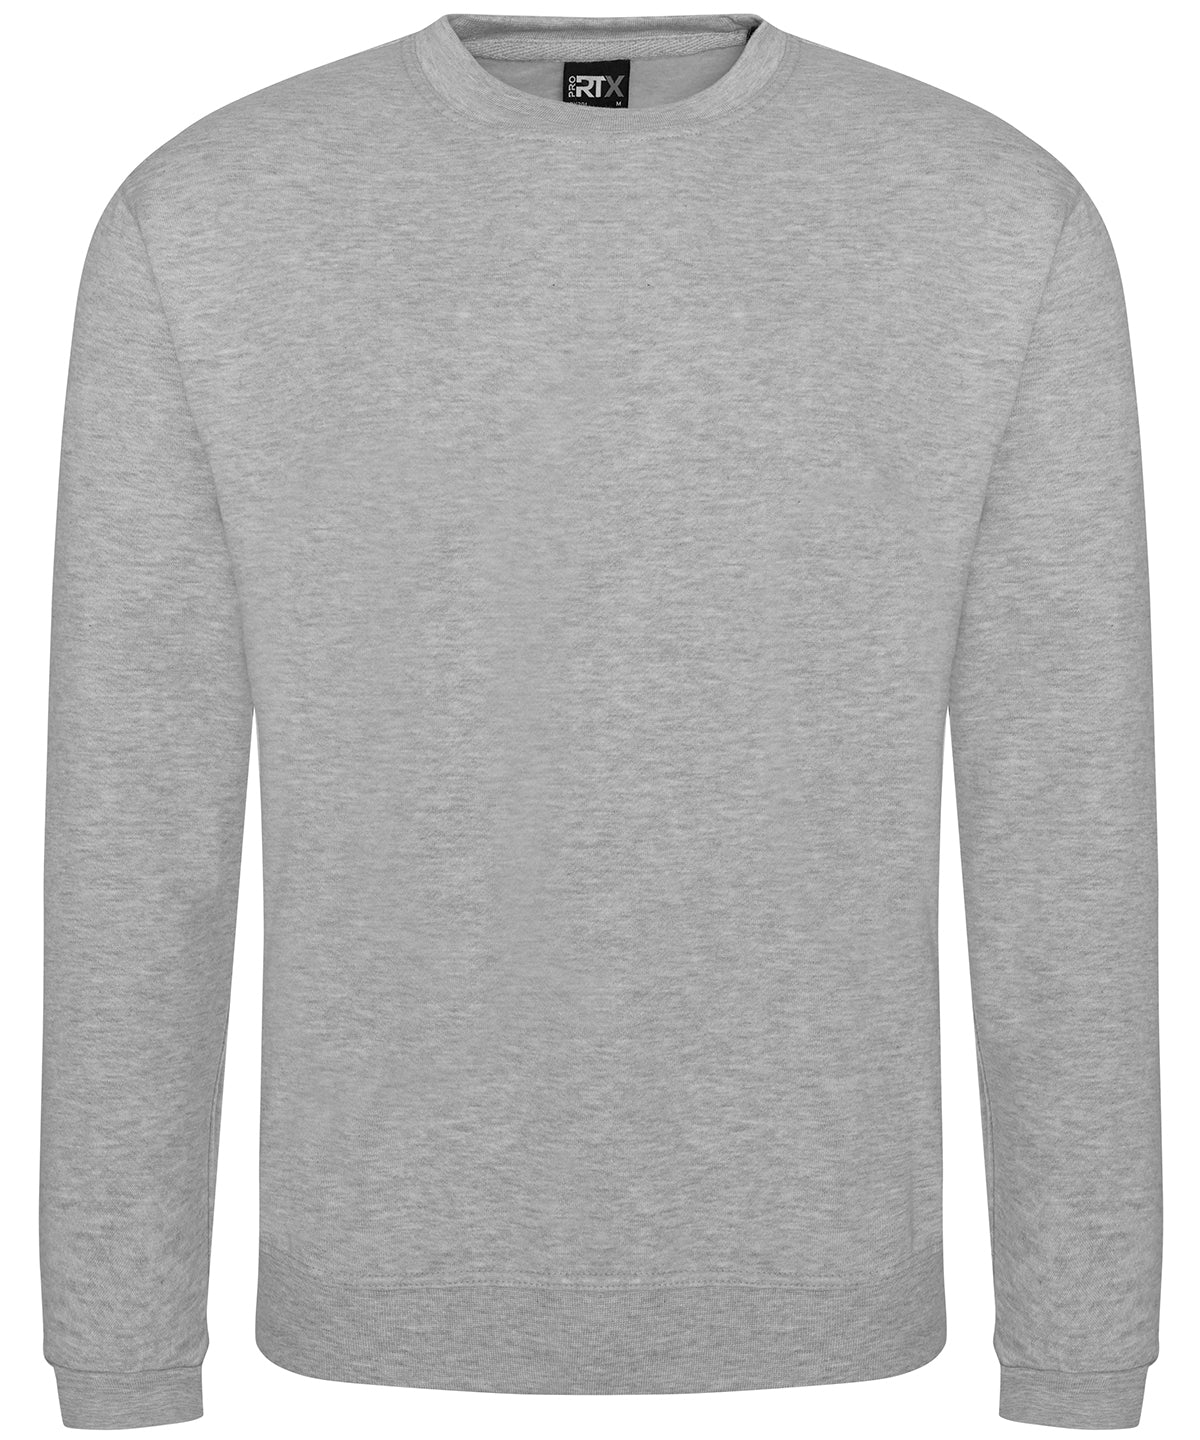 Pro sweatshirt sizes 2XL-7XL